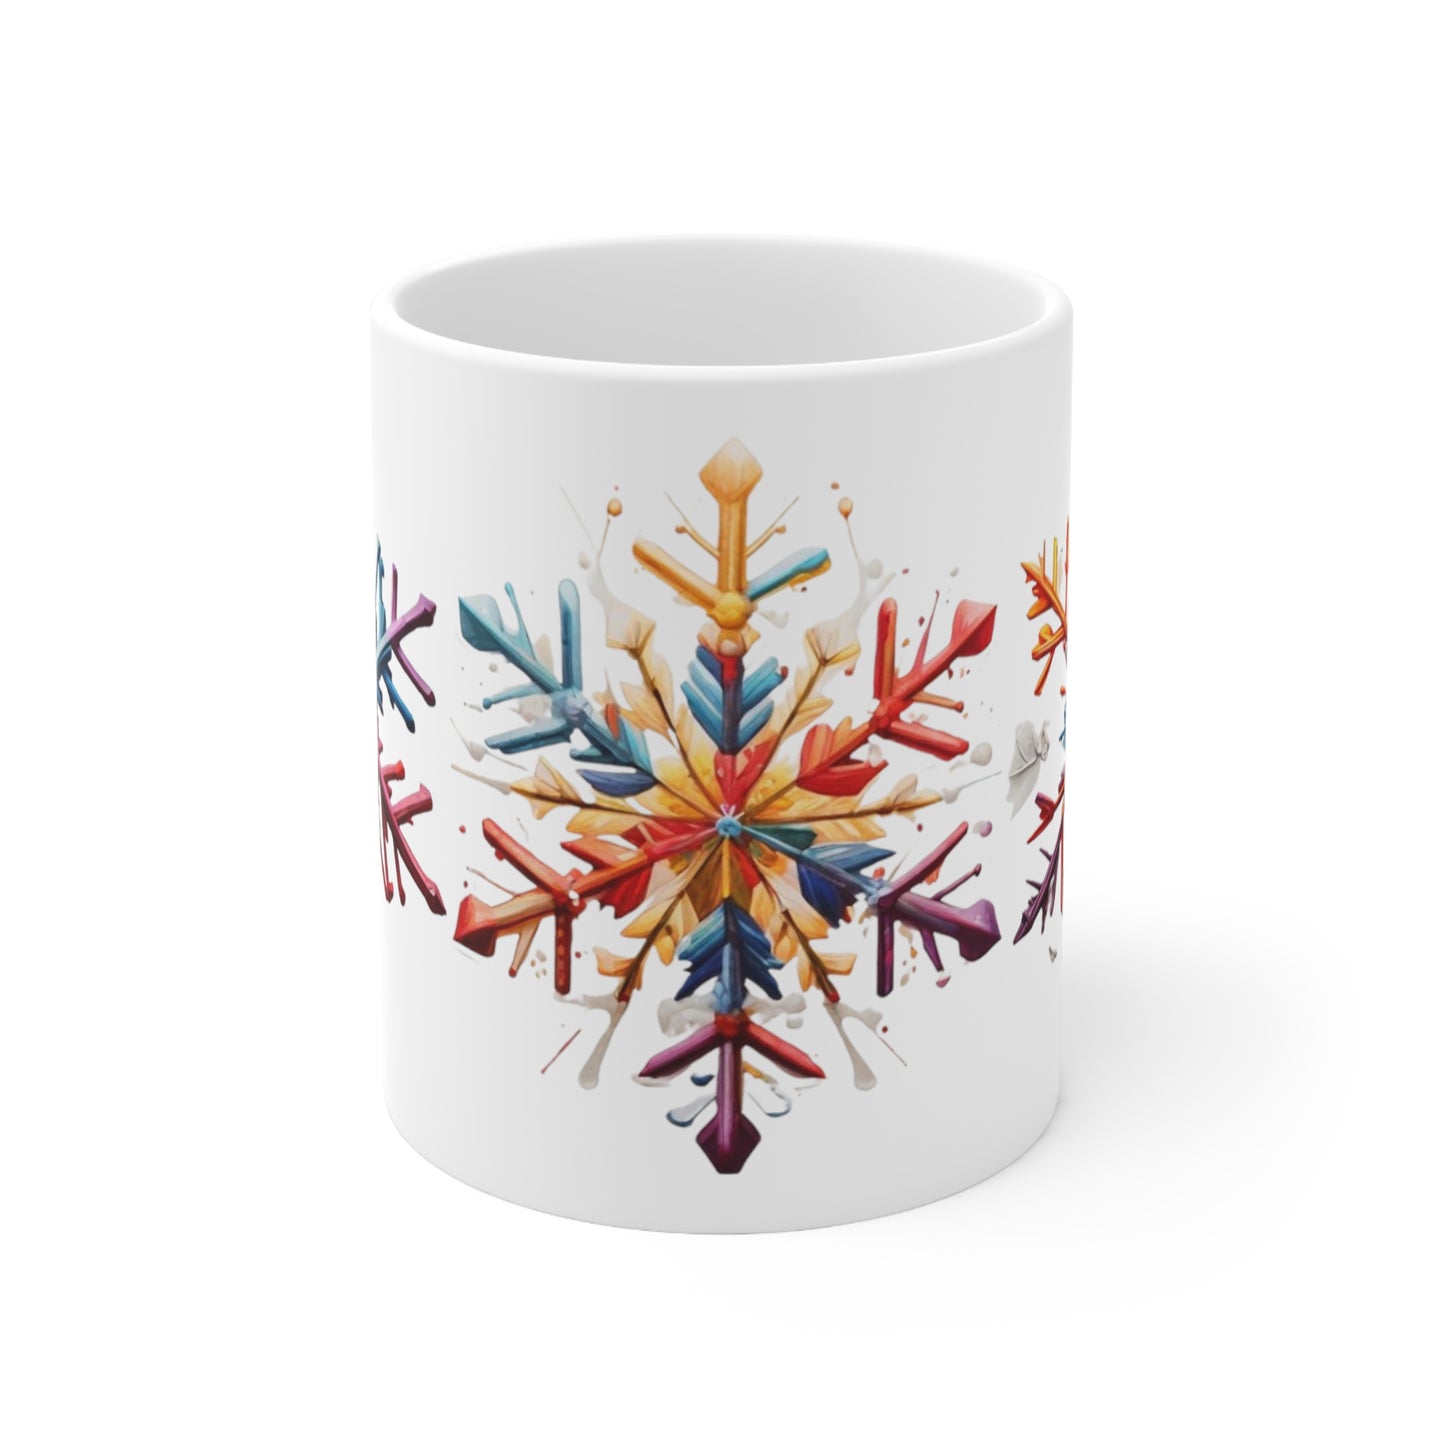 Colourful Broken Snowflakes Mug - Ceramic Coffee Mug 11oz